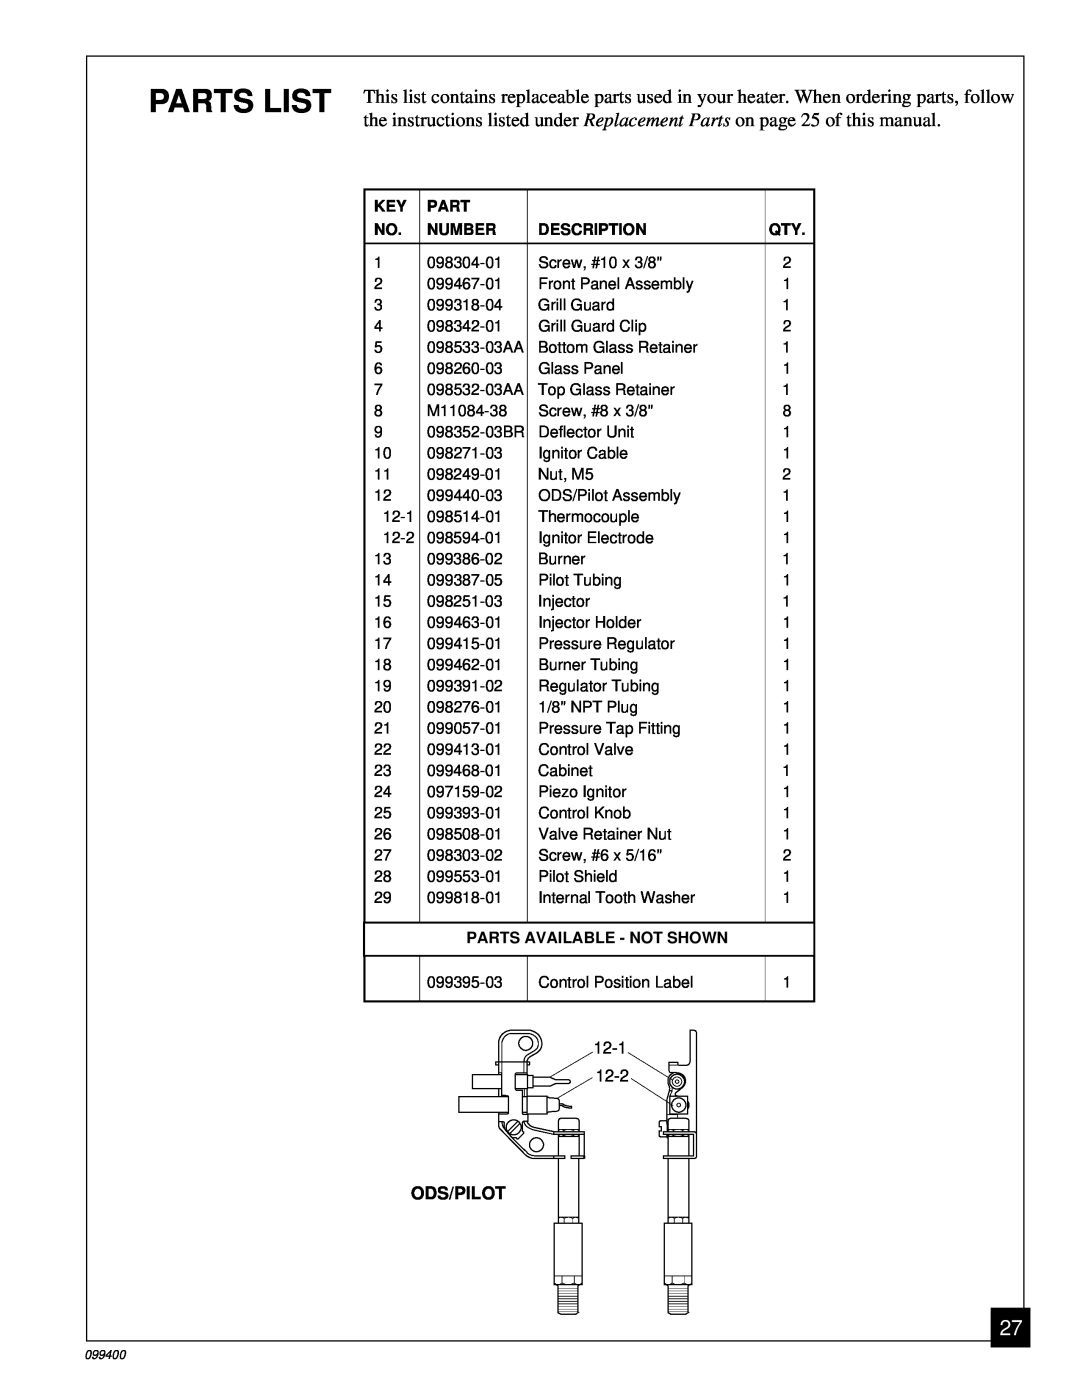 Desa VN1000B installation manual Parts List, Ods/Pilot 